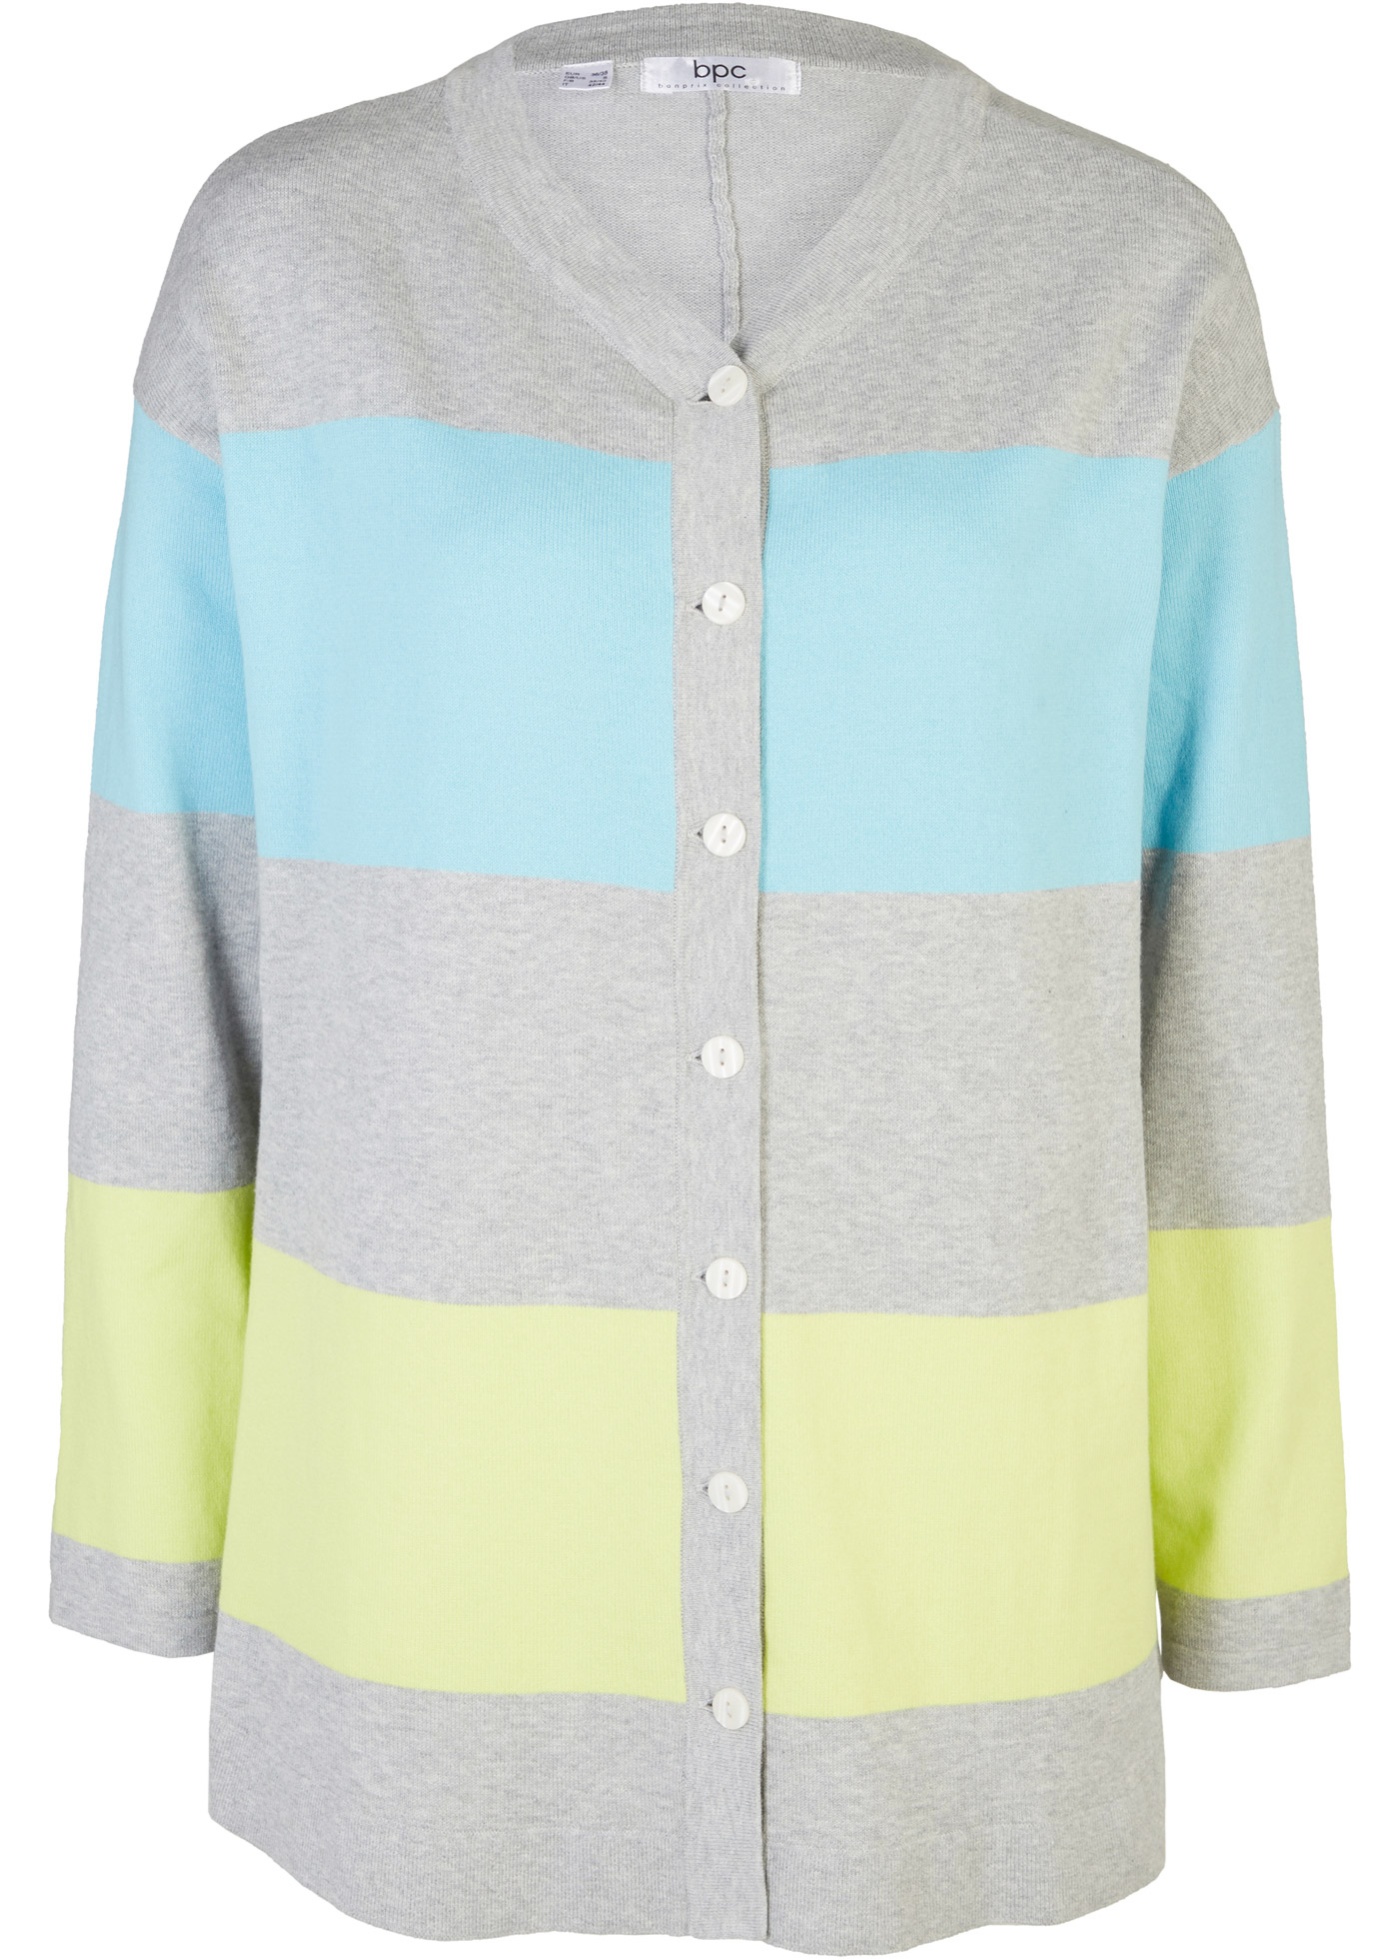 Pletený sveter s gombičkovou légou, strih A, colorblocking